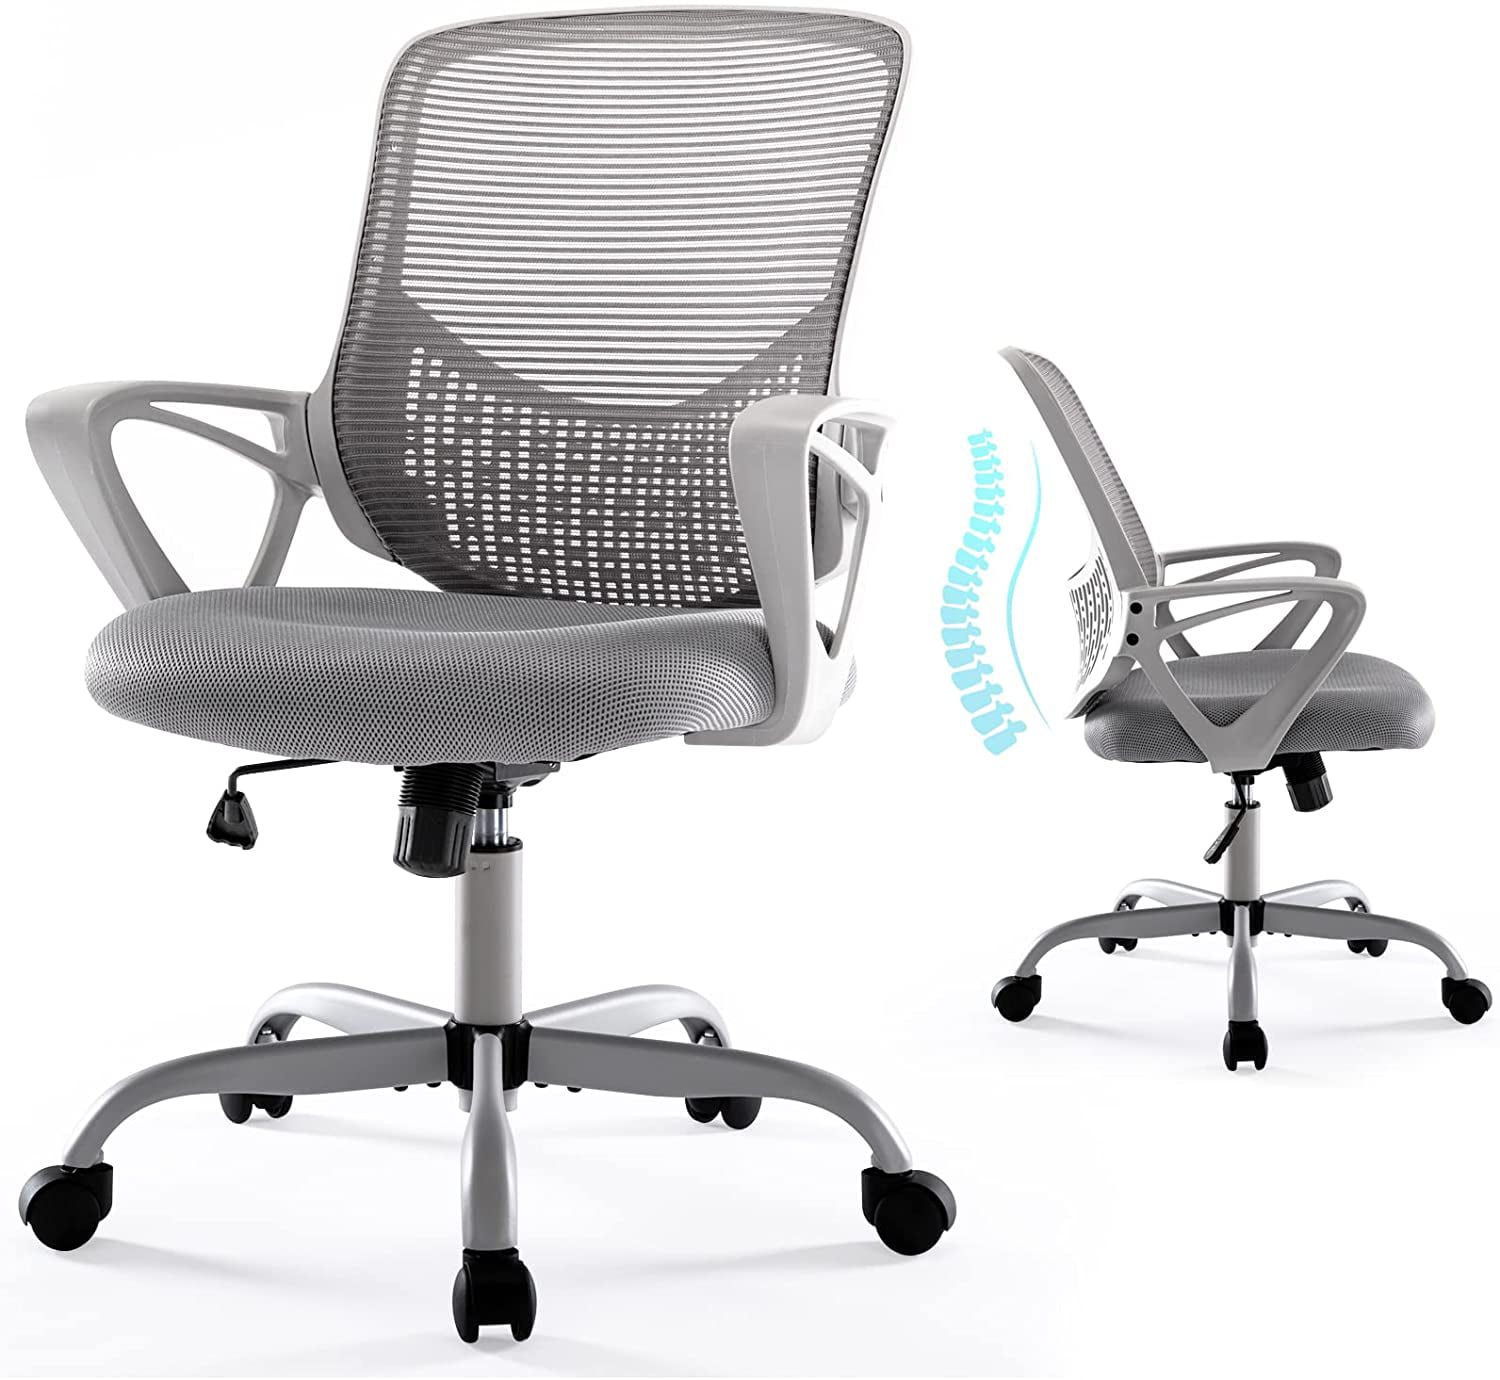 Ergonomic Mesh Office Chair Adjustable Desk Chair Swivel Computer Chairs UK 